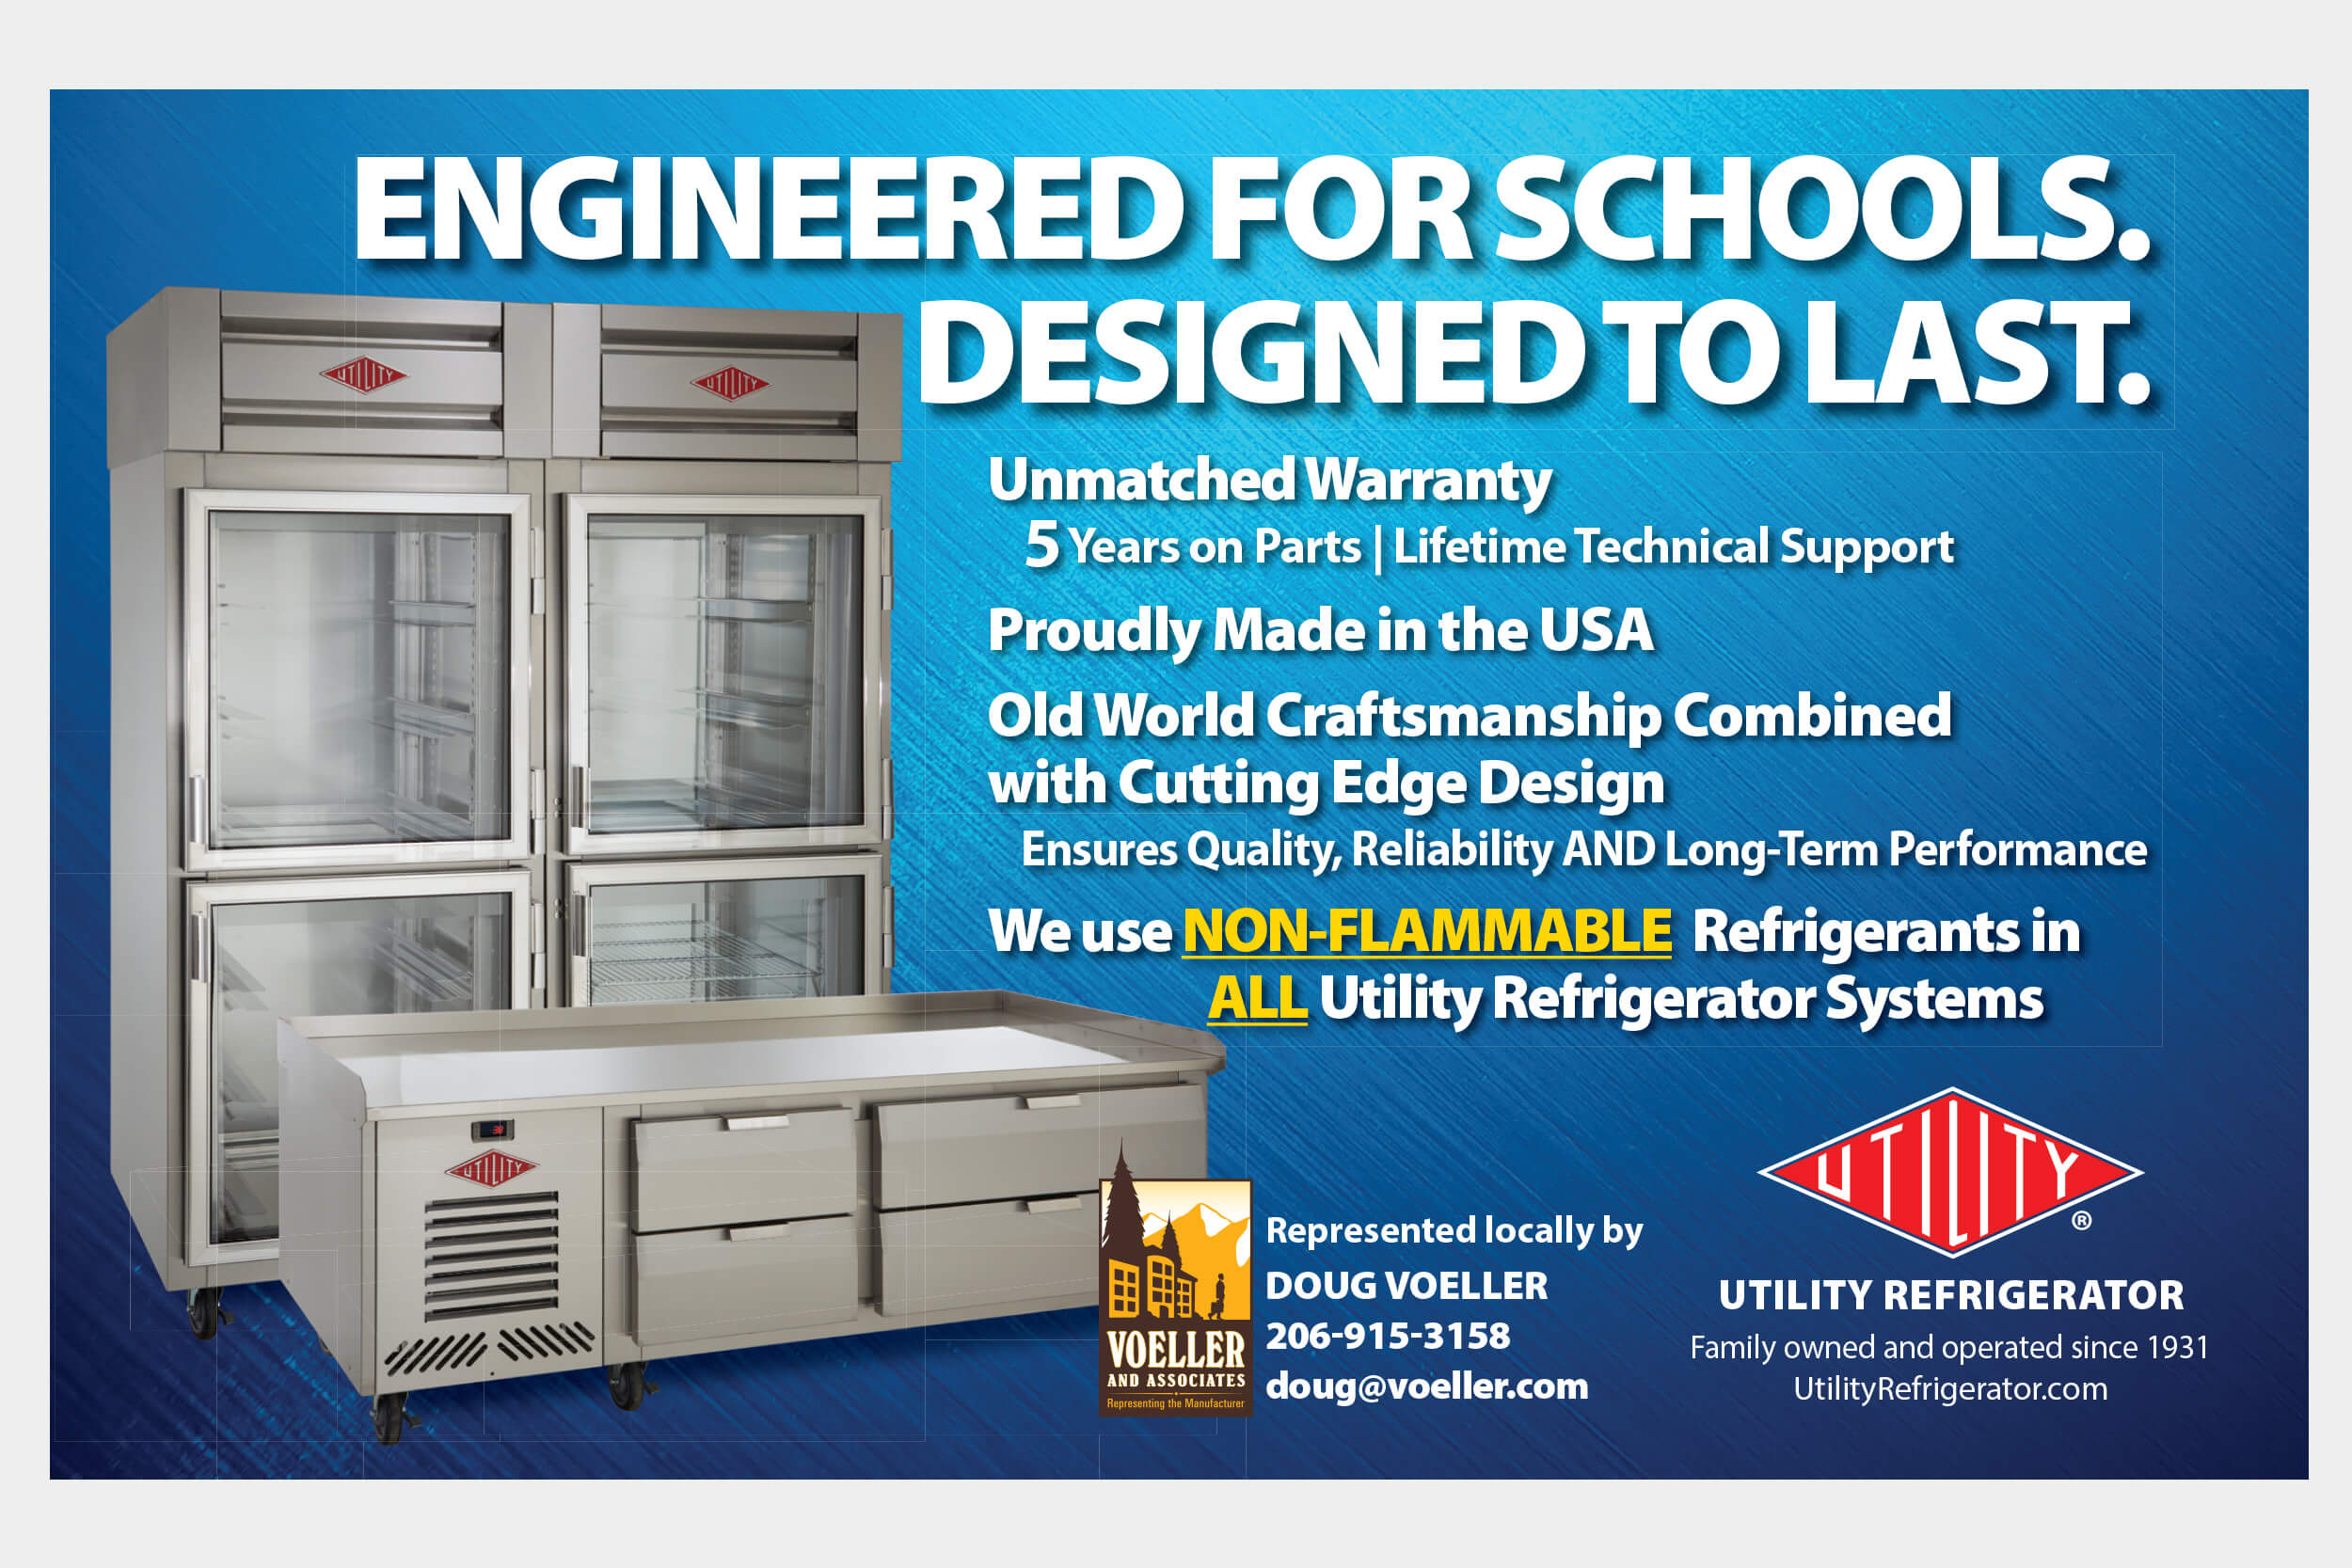 Utility Refrigerator Engineered for Schools